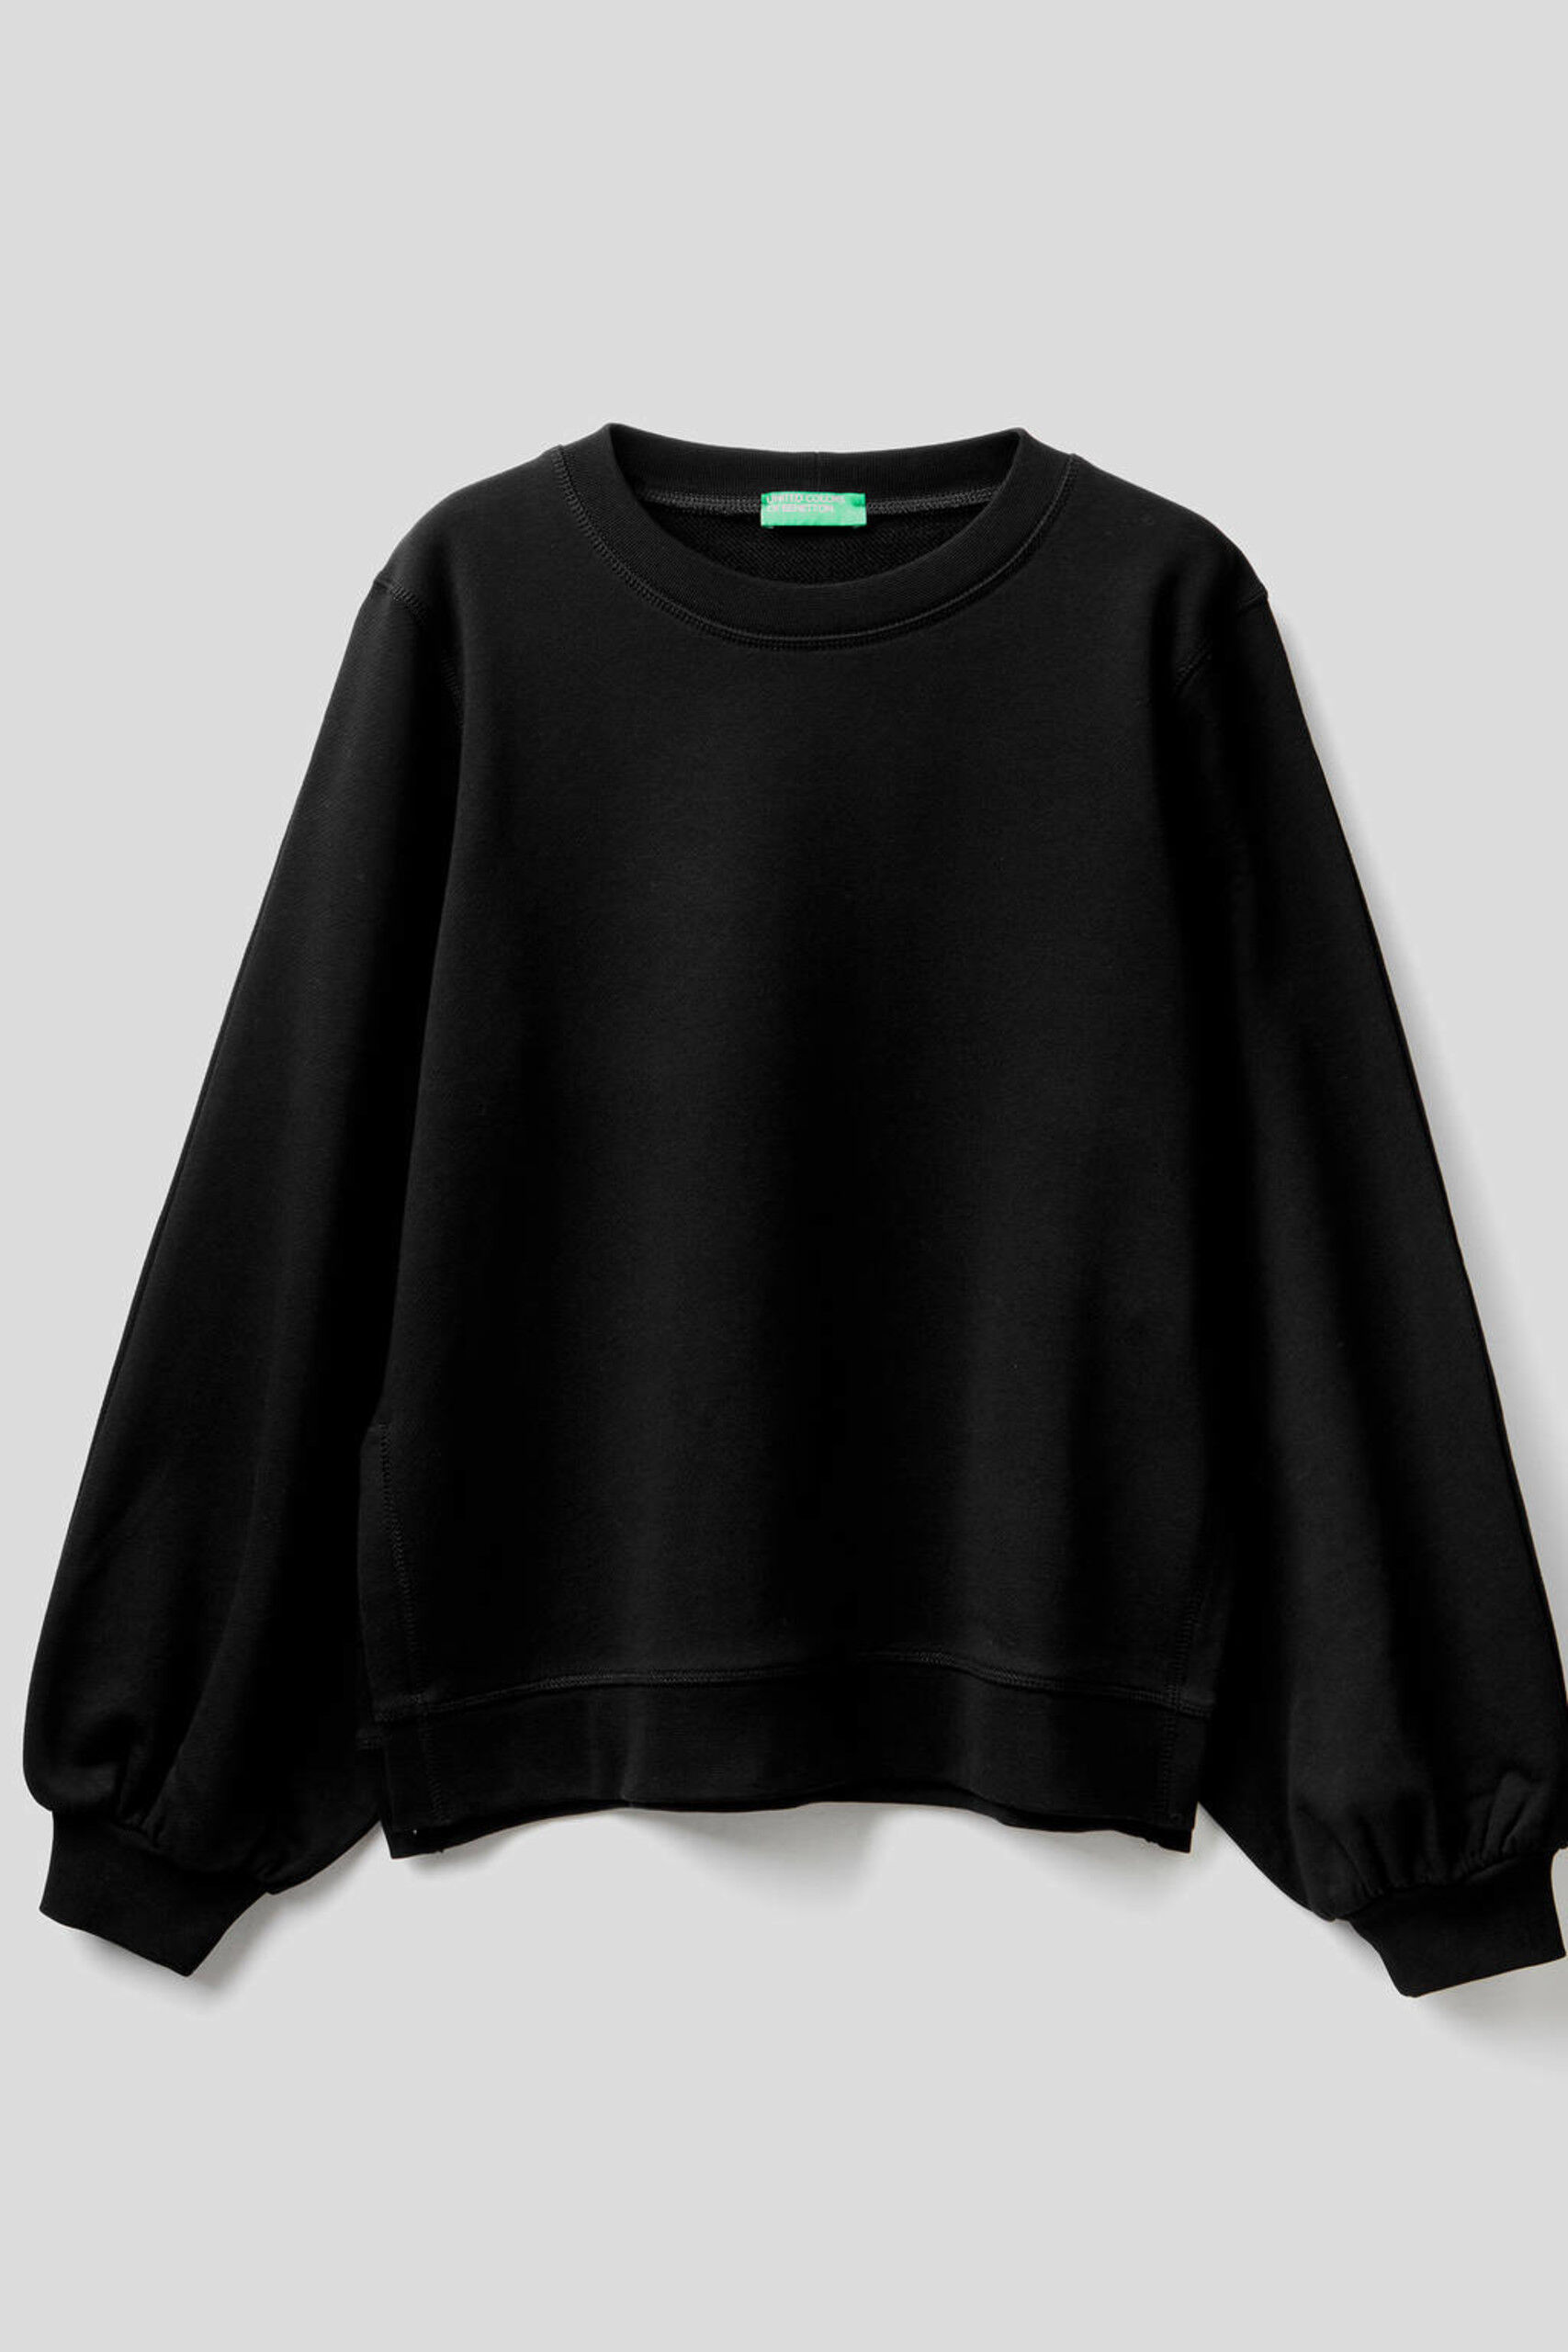 Women's Sweatshirts Collection 2021 | Benetton